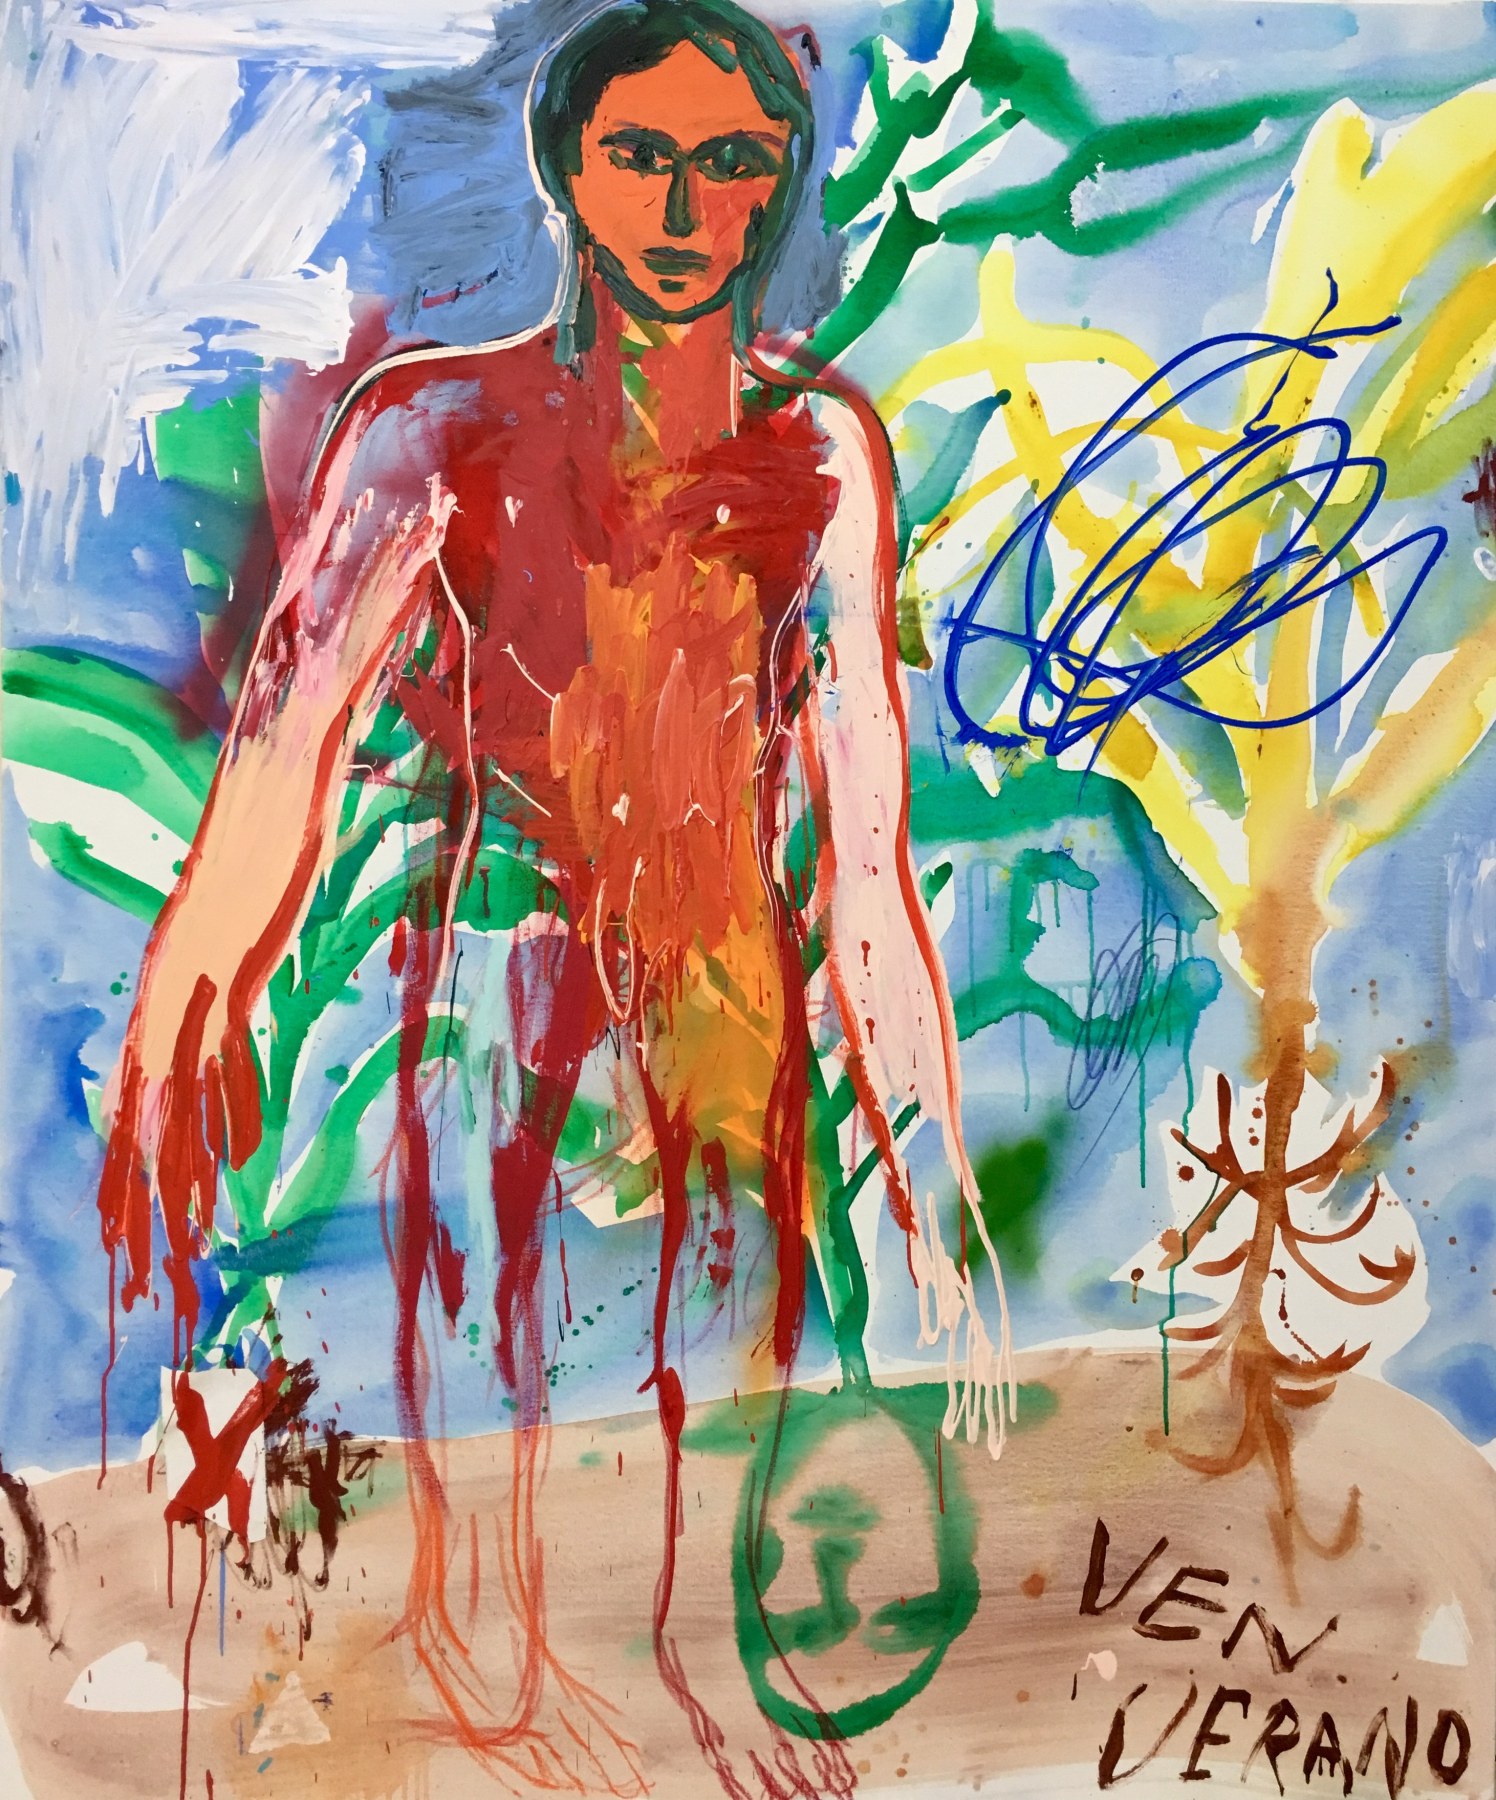 Ven Verano, 2018, Acrylic, oil, crayon, and spray paint on canvas